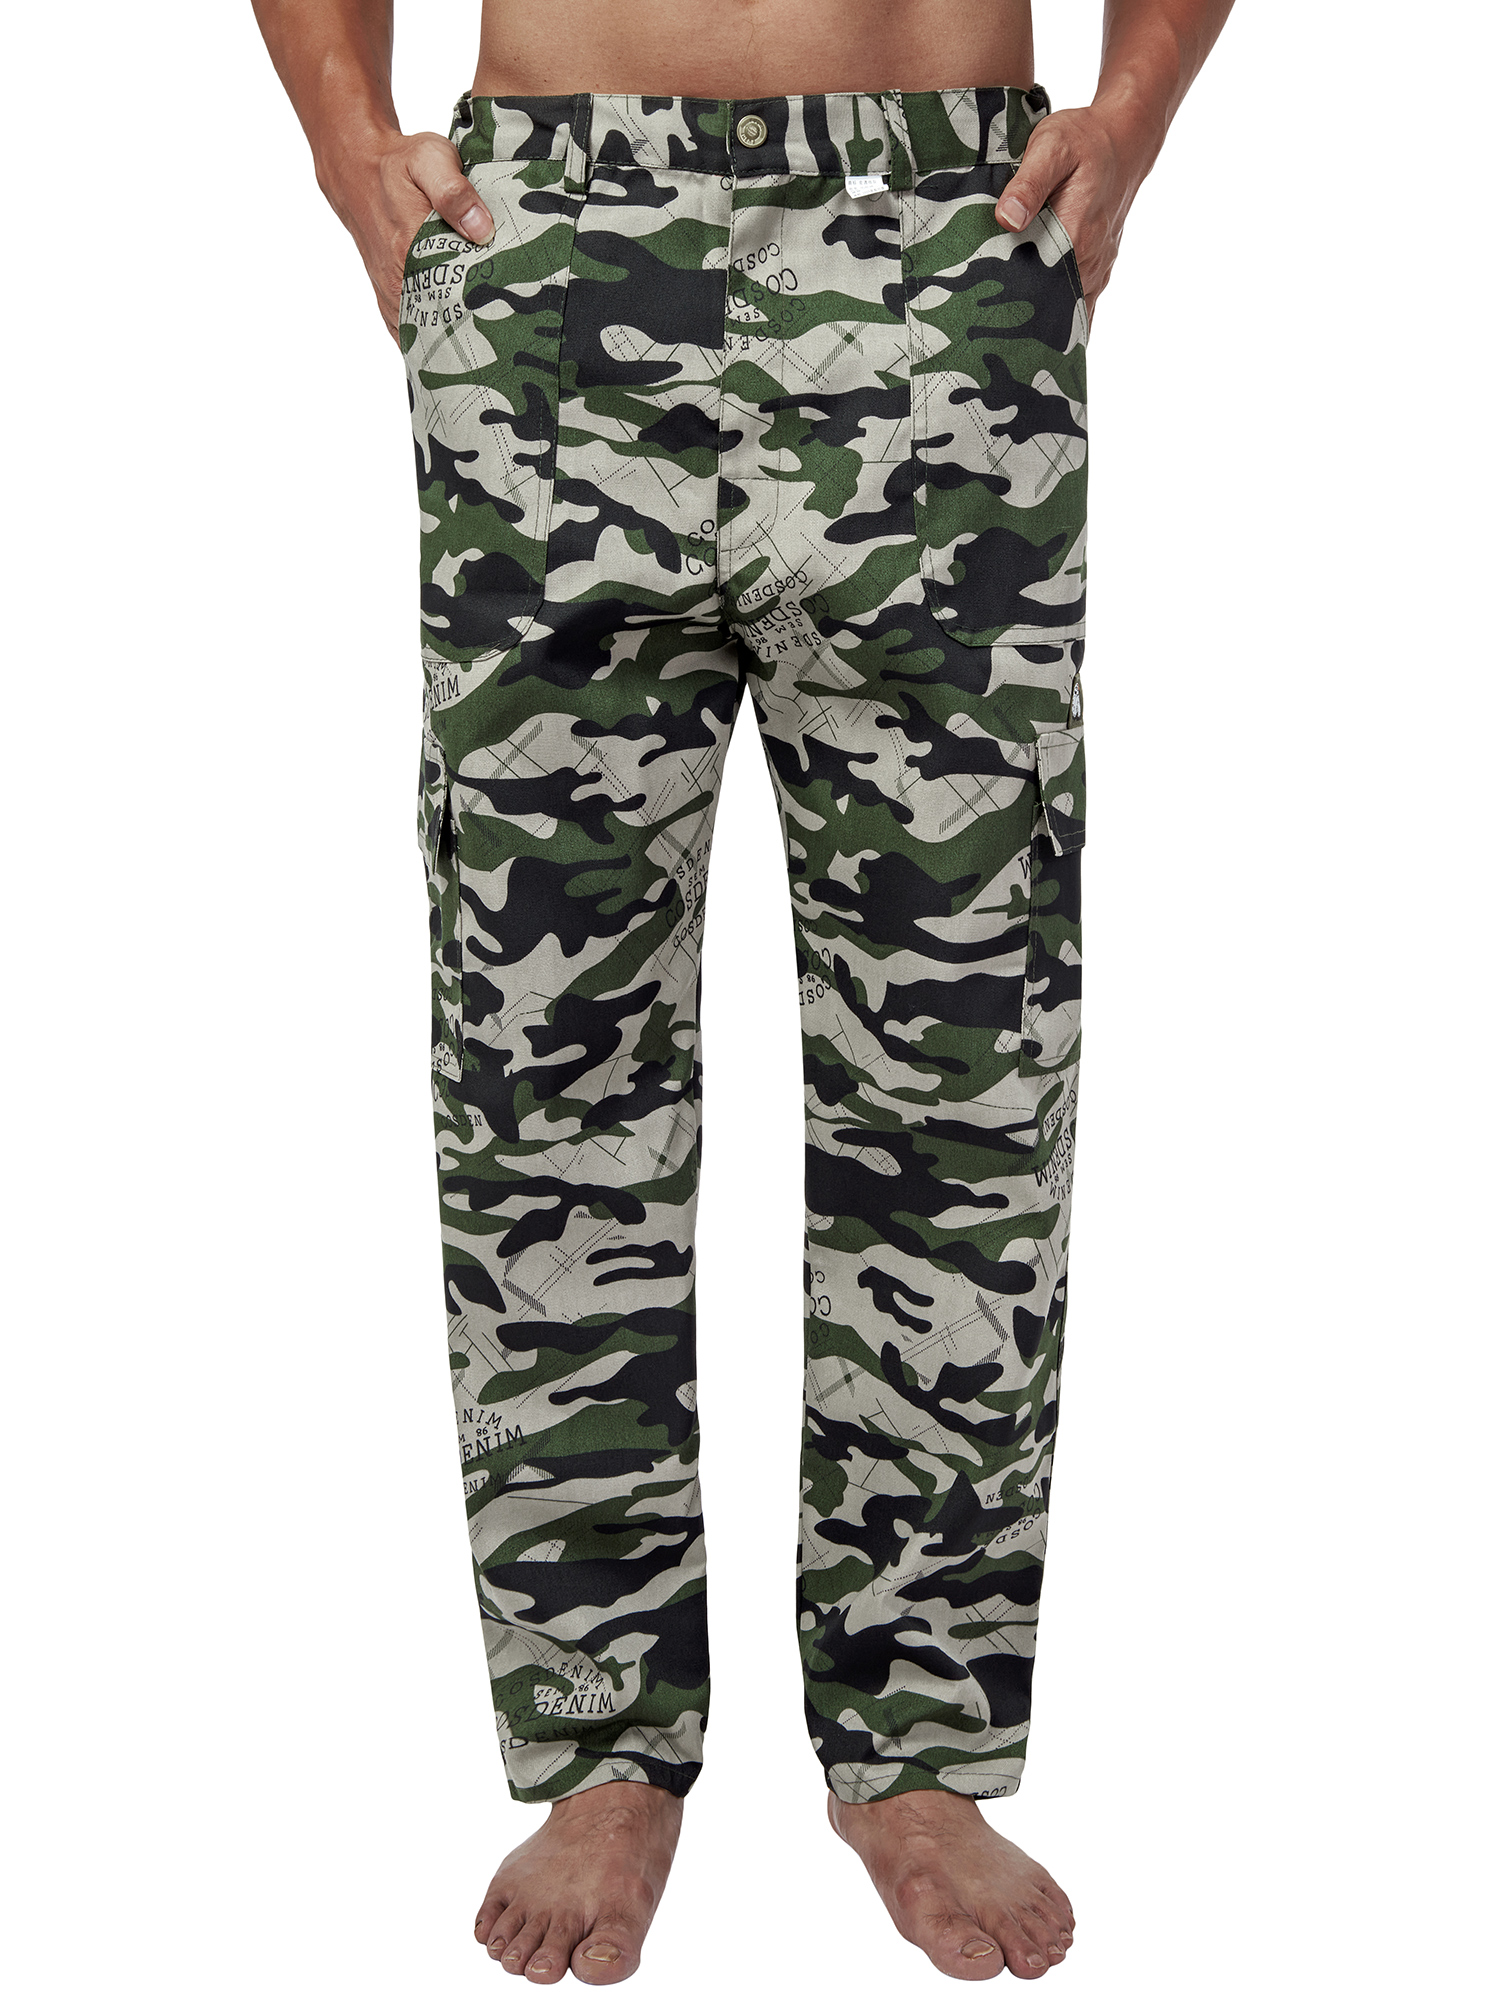 FOCUSSEXY Men Comfort Cargo Pant Tactical Combat Cargo Pocket Long Pants Work Wear Casual Bottoms Outdoor Camo Stretch Cargo Pants - image 1 of 7